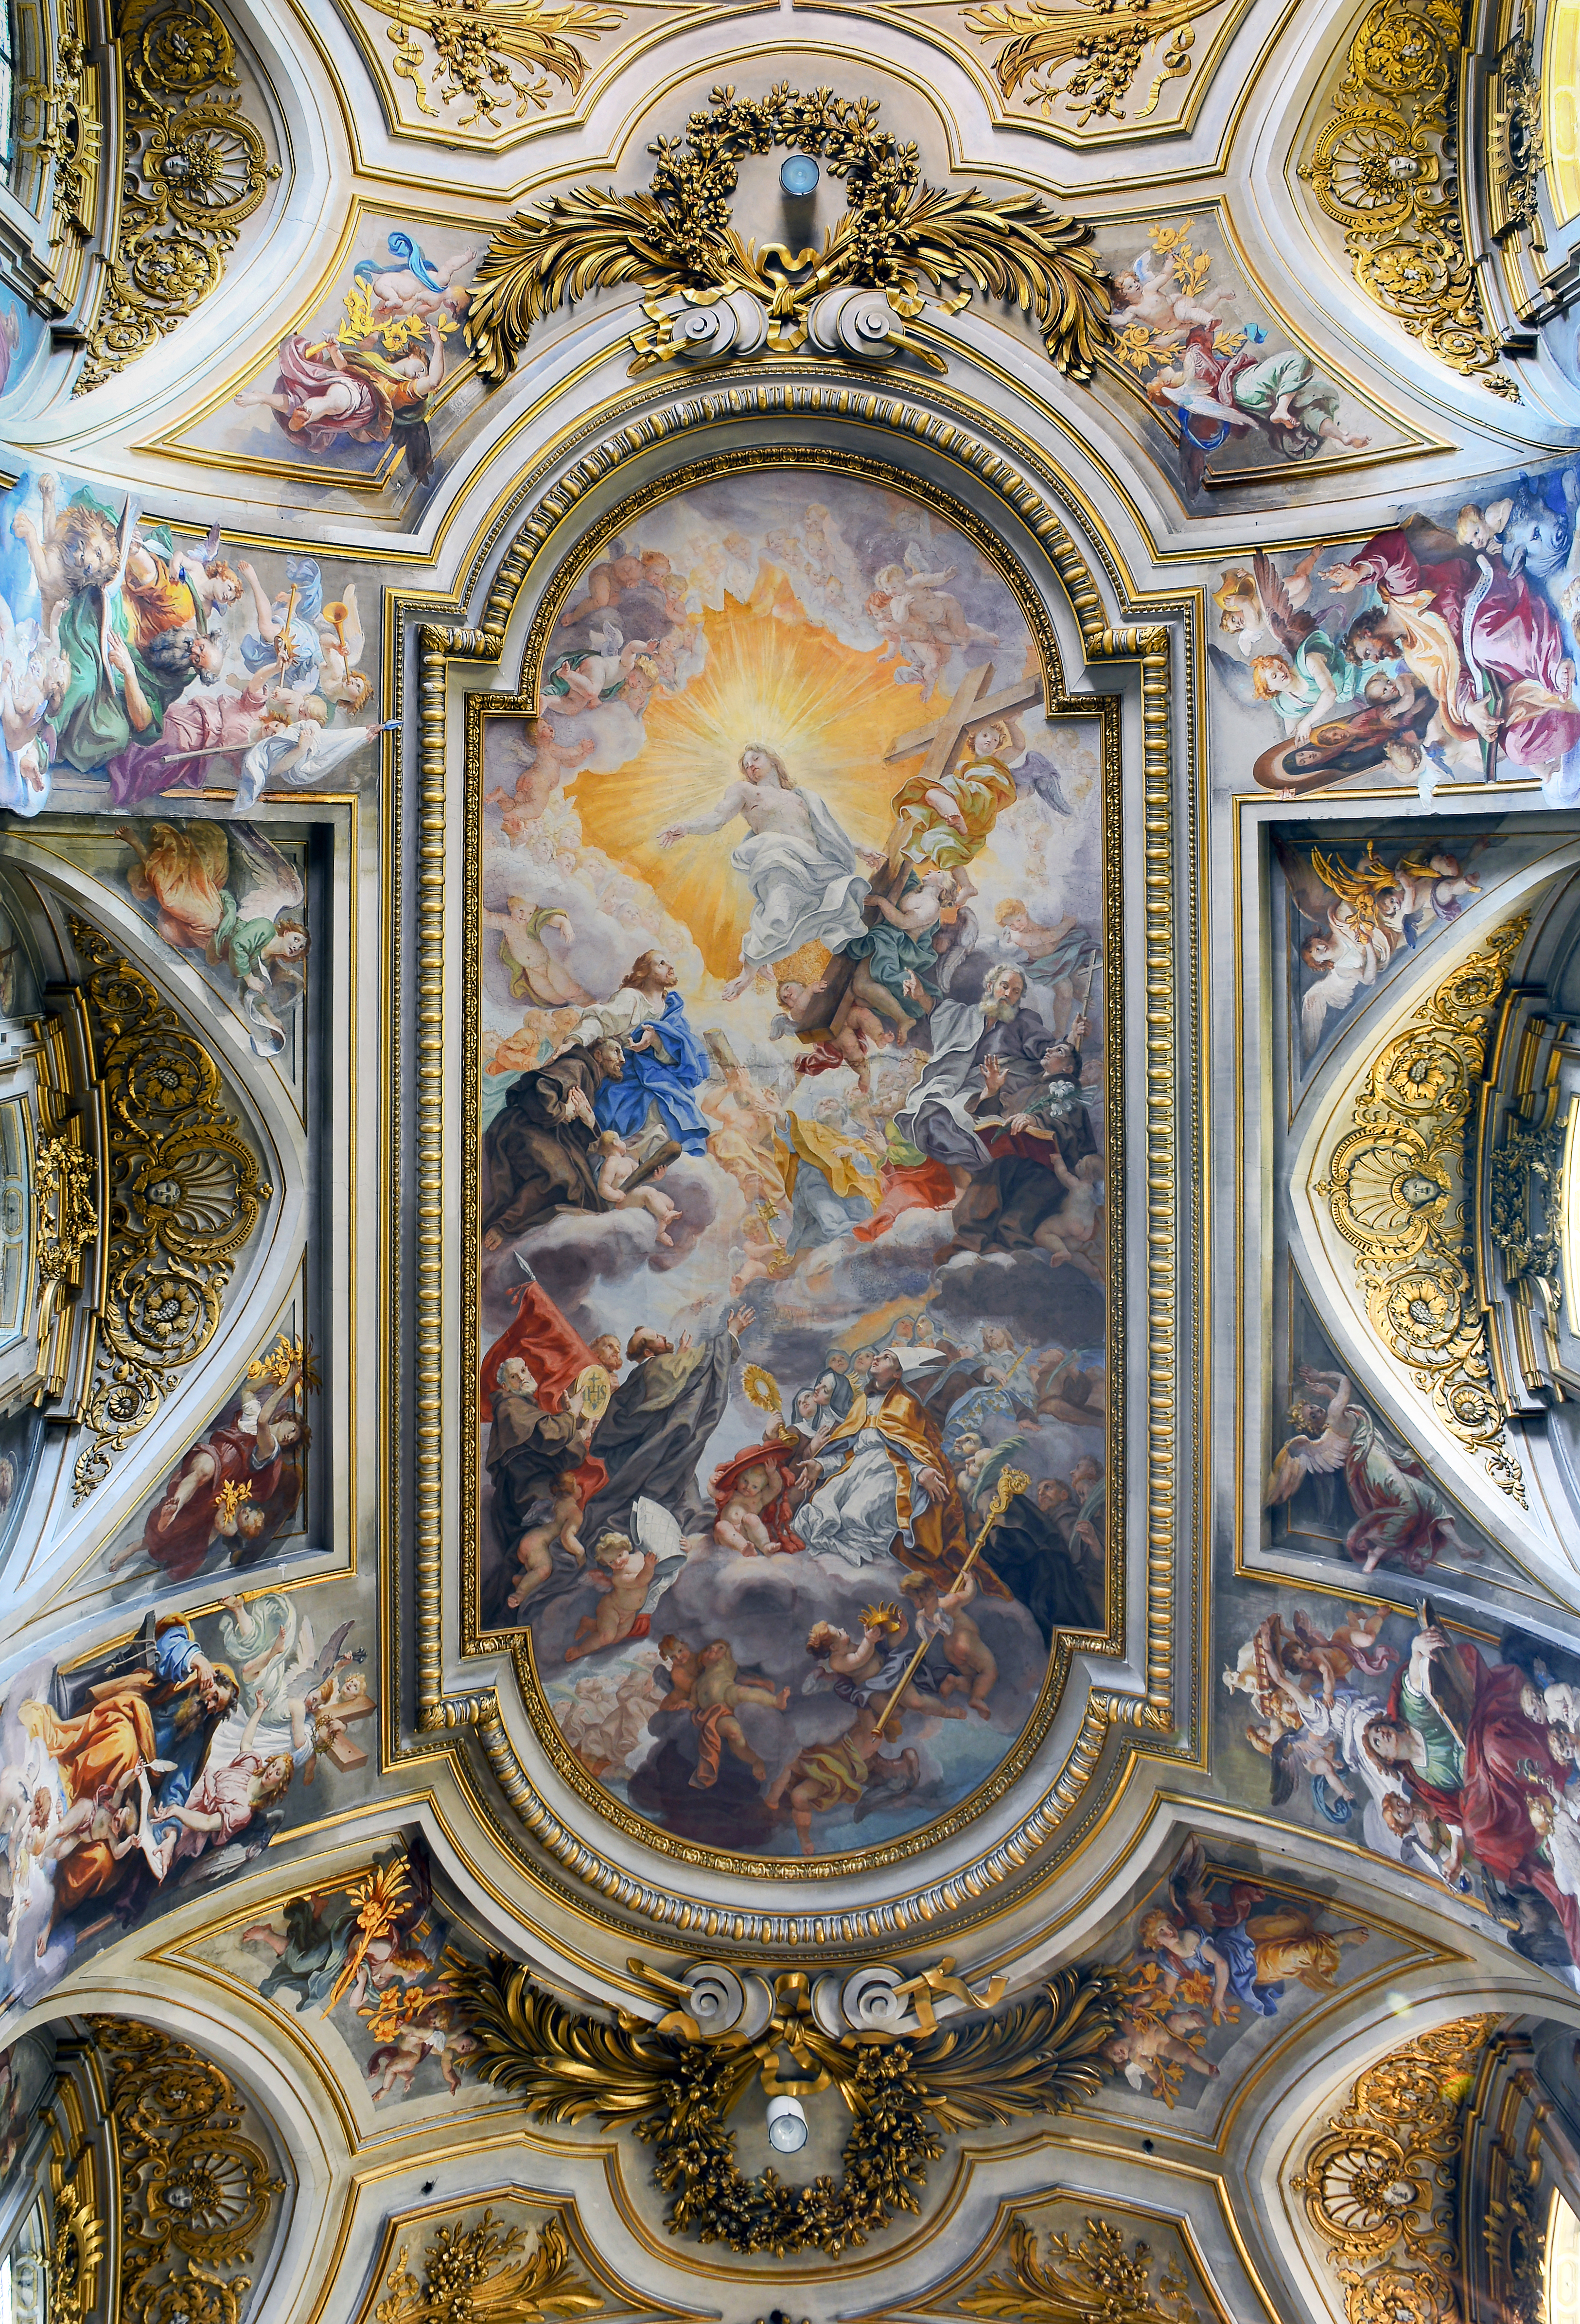 Basilica dei Santi Apostoli (Rome) - Ceiling